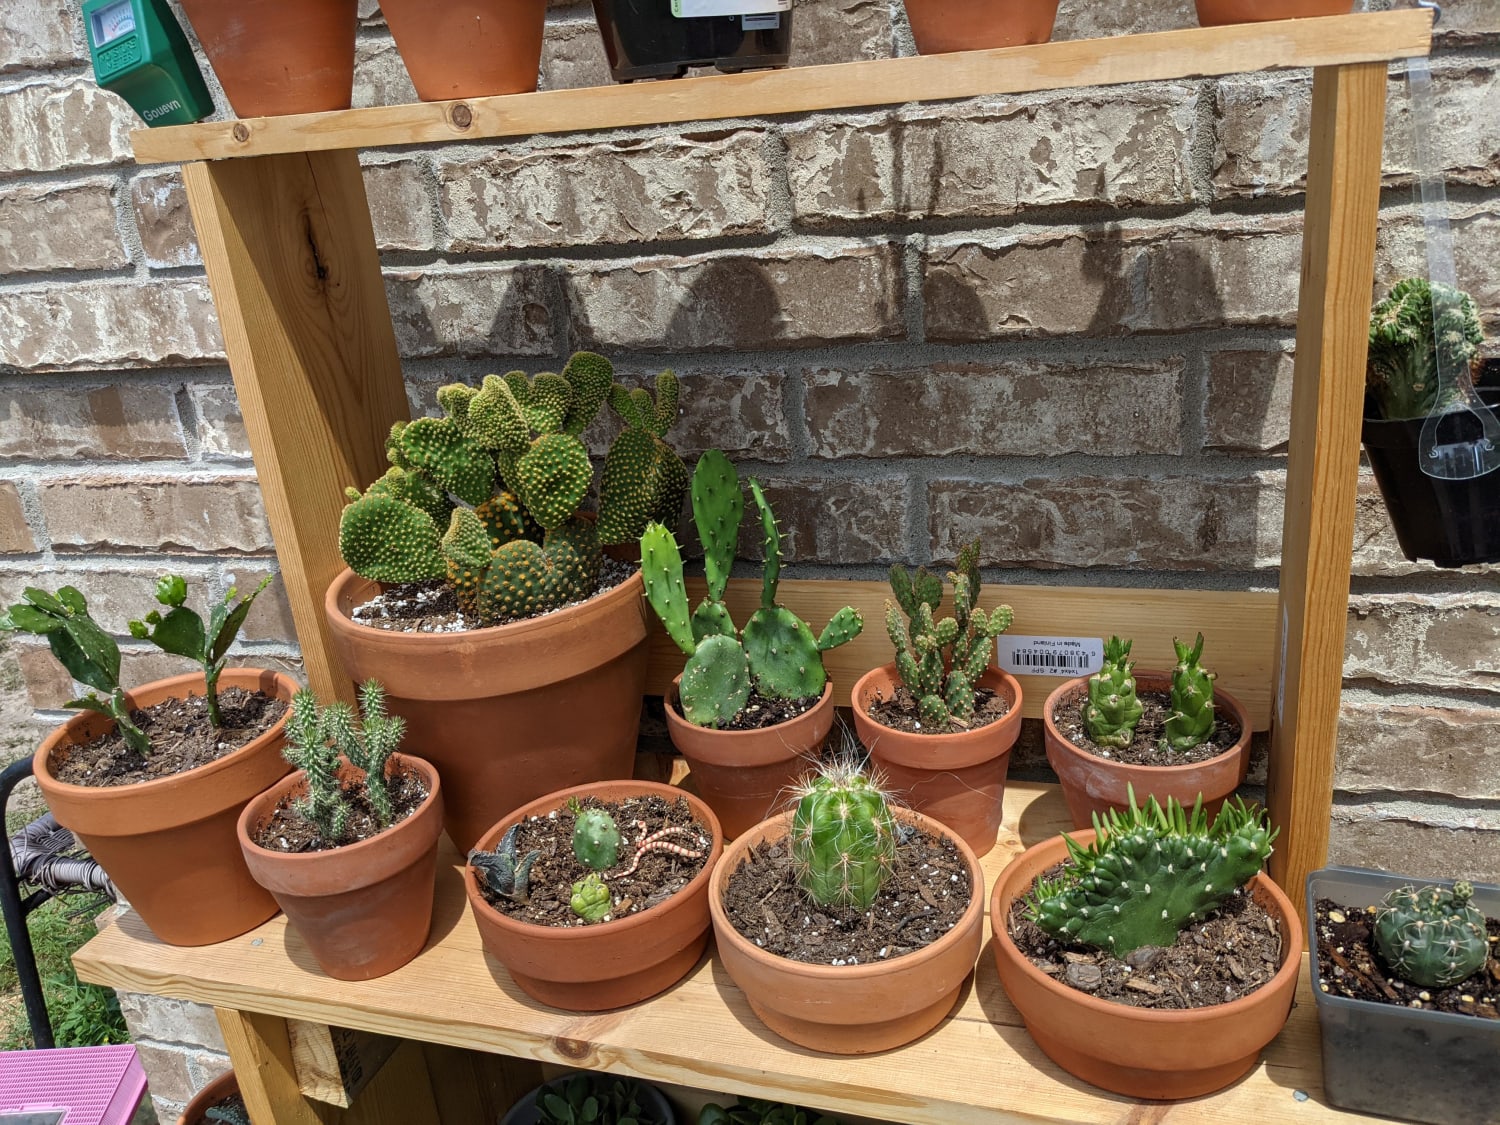 I like cacti